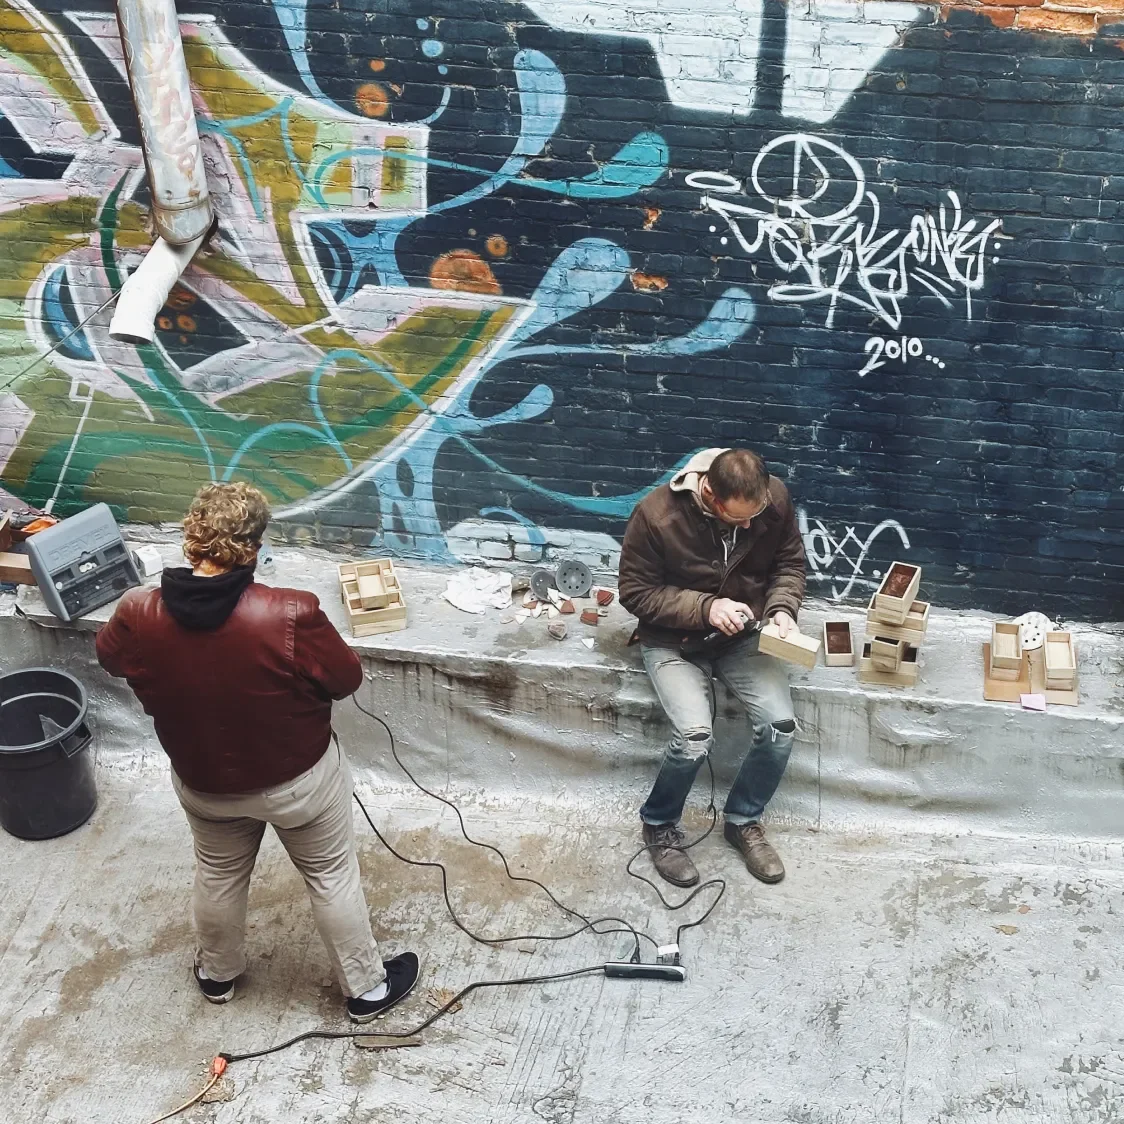 Chris Rinehart and Gabriel Cuddy sanding wood boxes against a graffitied wall